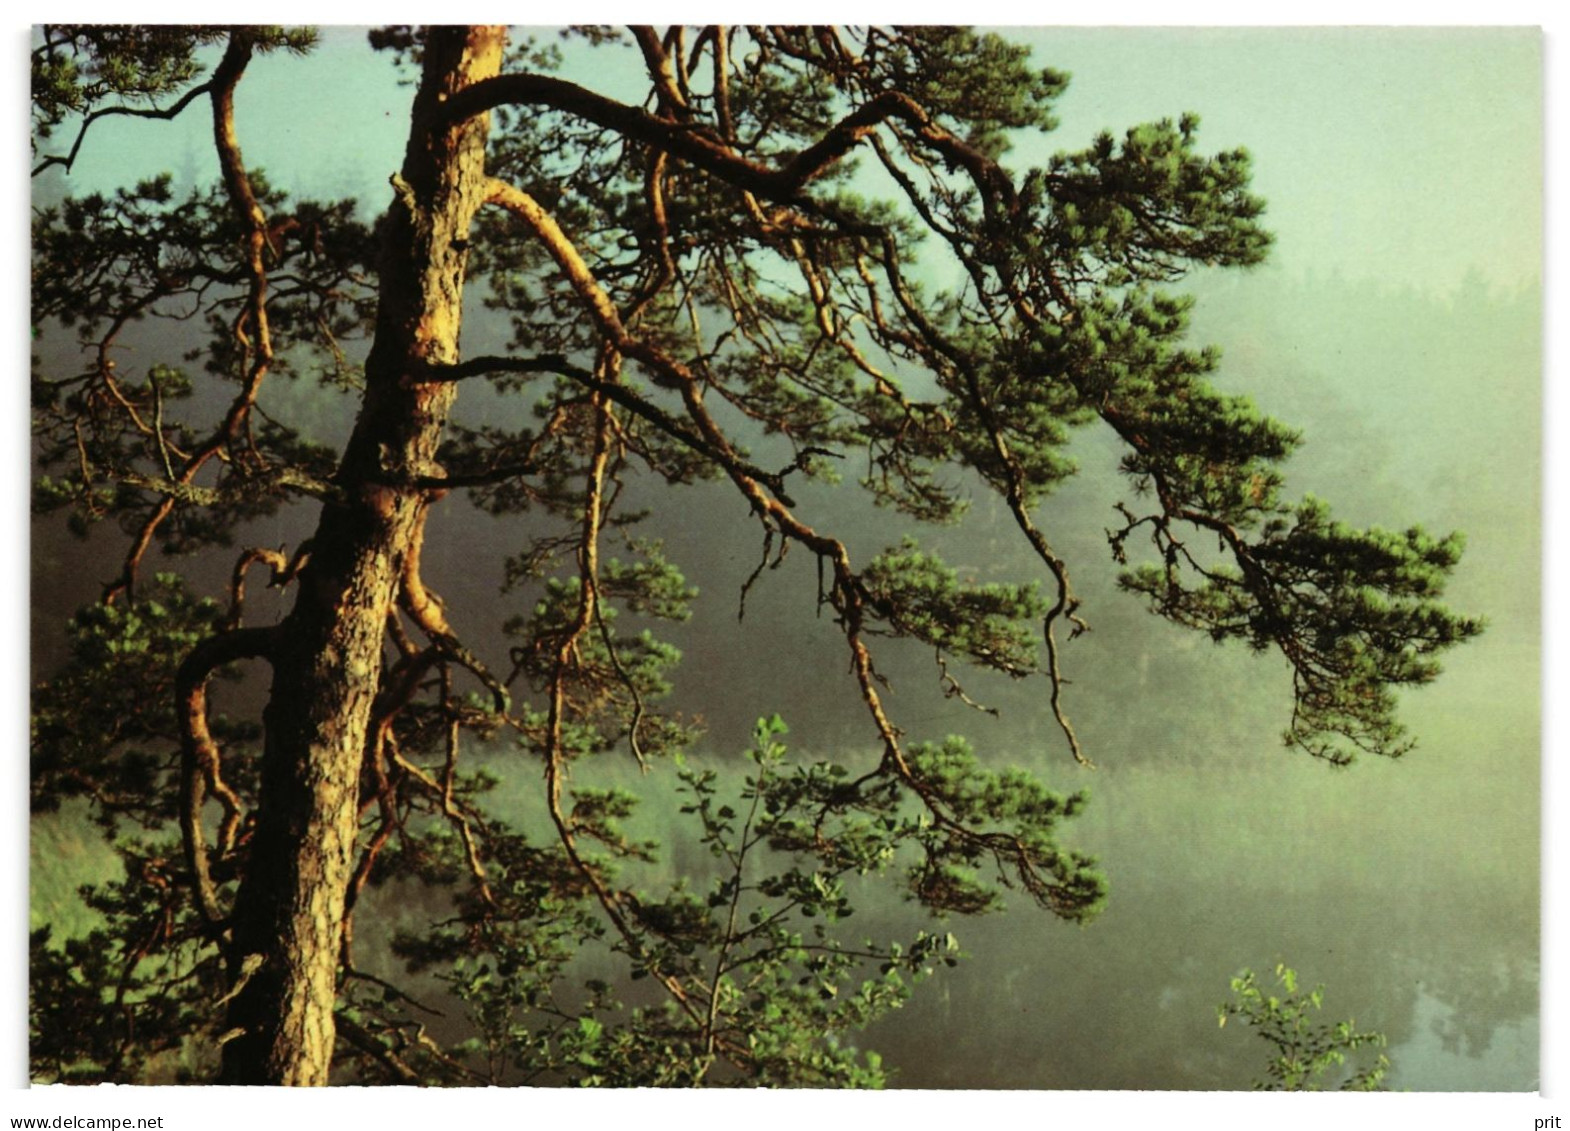 Pine Tree, Finland Finnish WWF Unused Postcard 1980s Publisher World Wide Fund For Nature, Serie Tunnelma 3, M.Rautkari - Rhinozeros